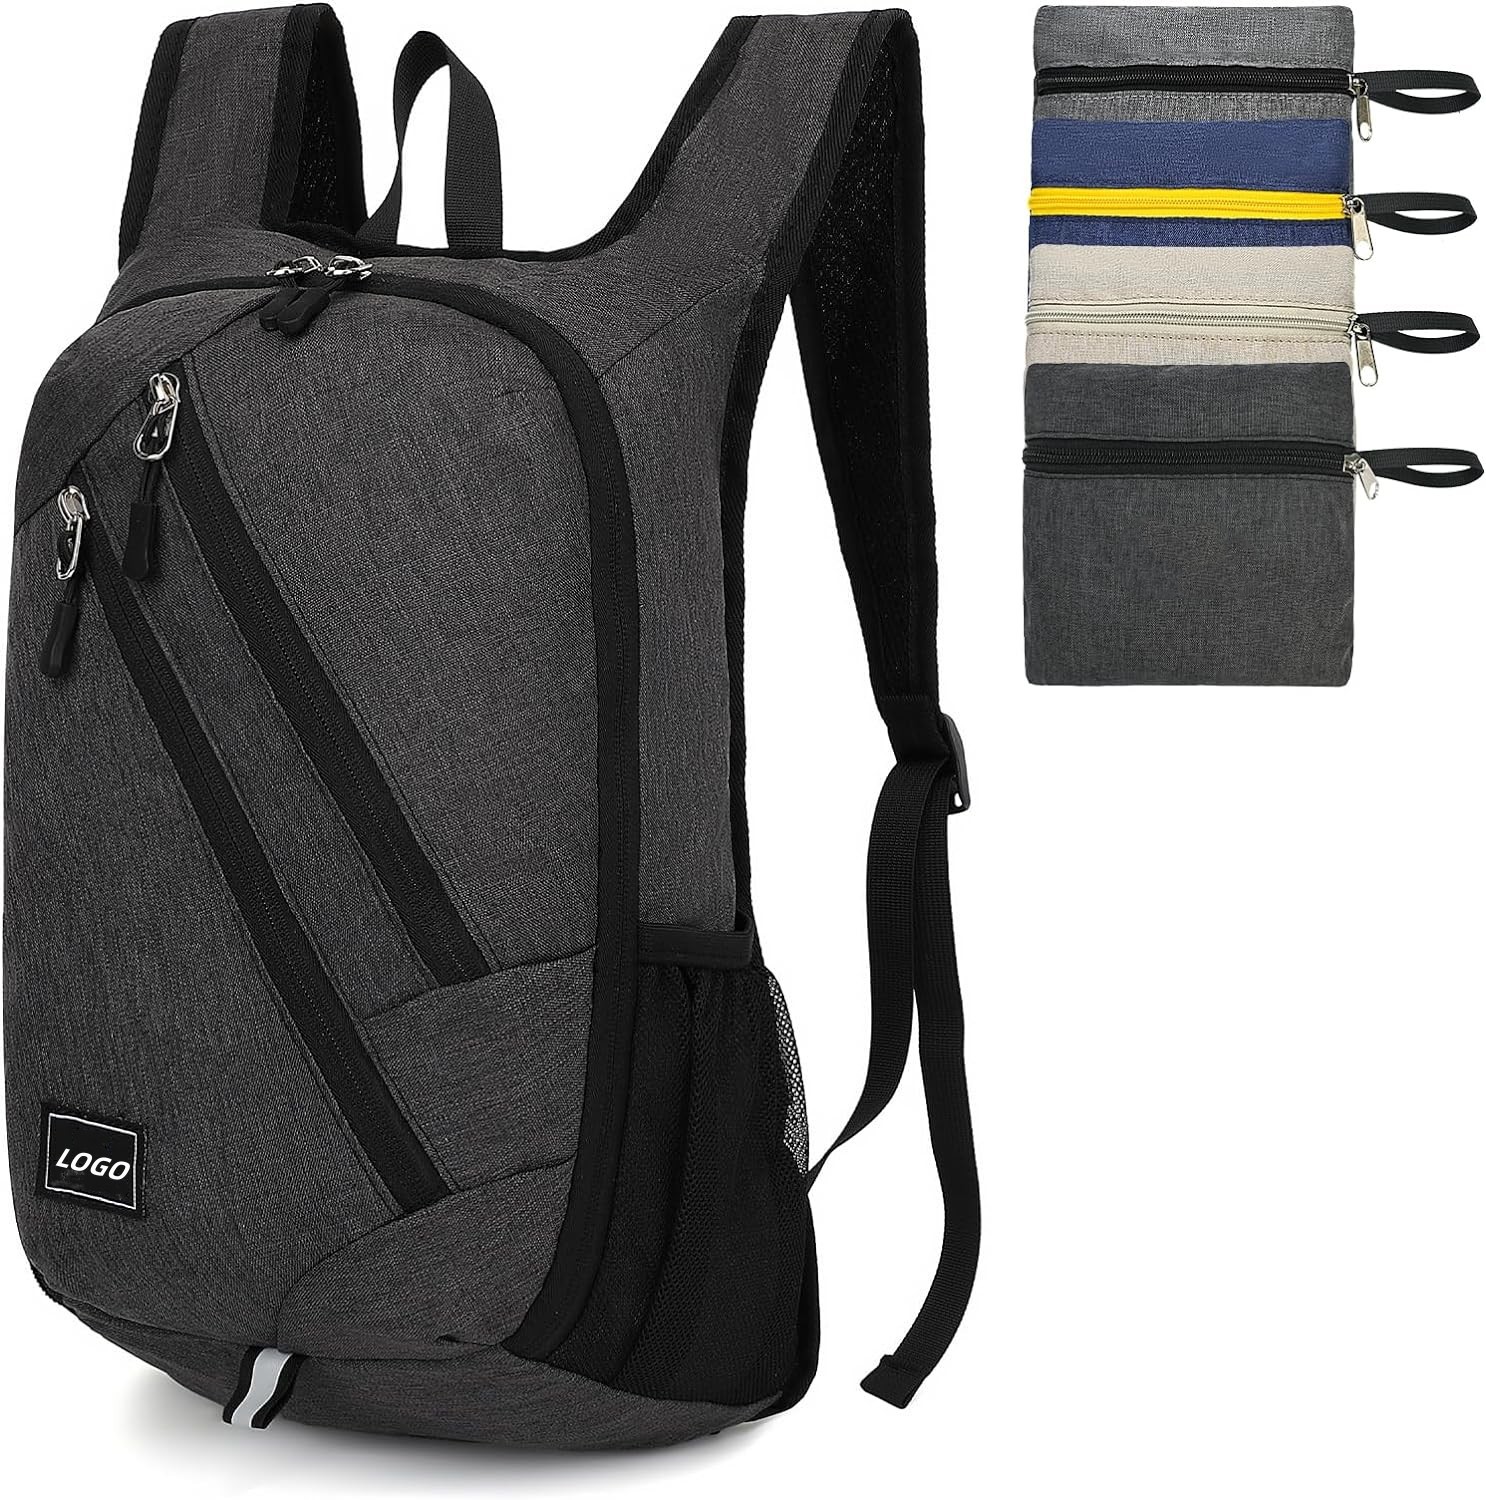 ODM OEM 15L Small Daypack Backpack Outdoor Travel Hiking School Bag for Men